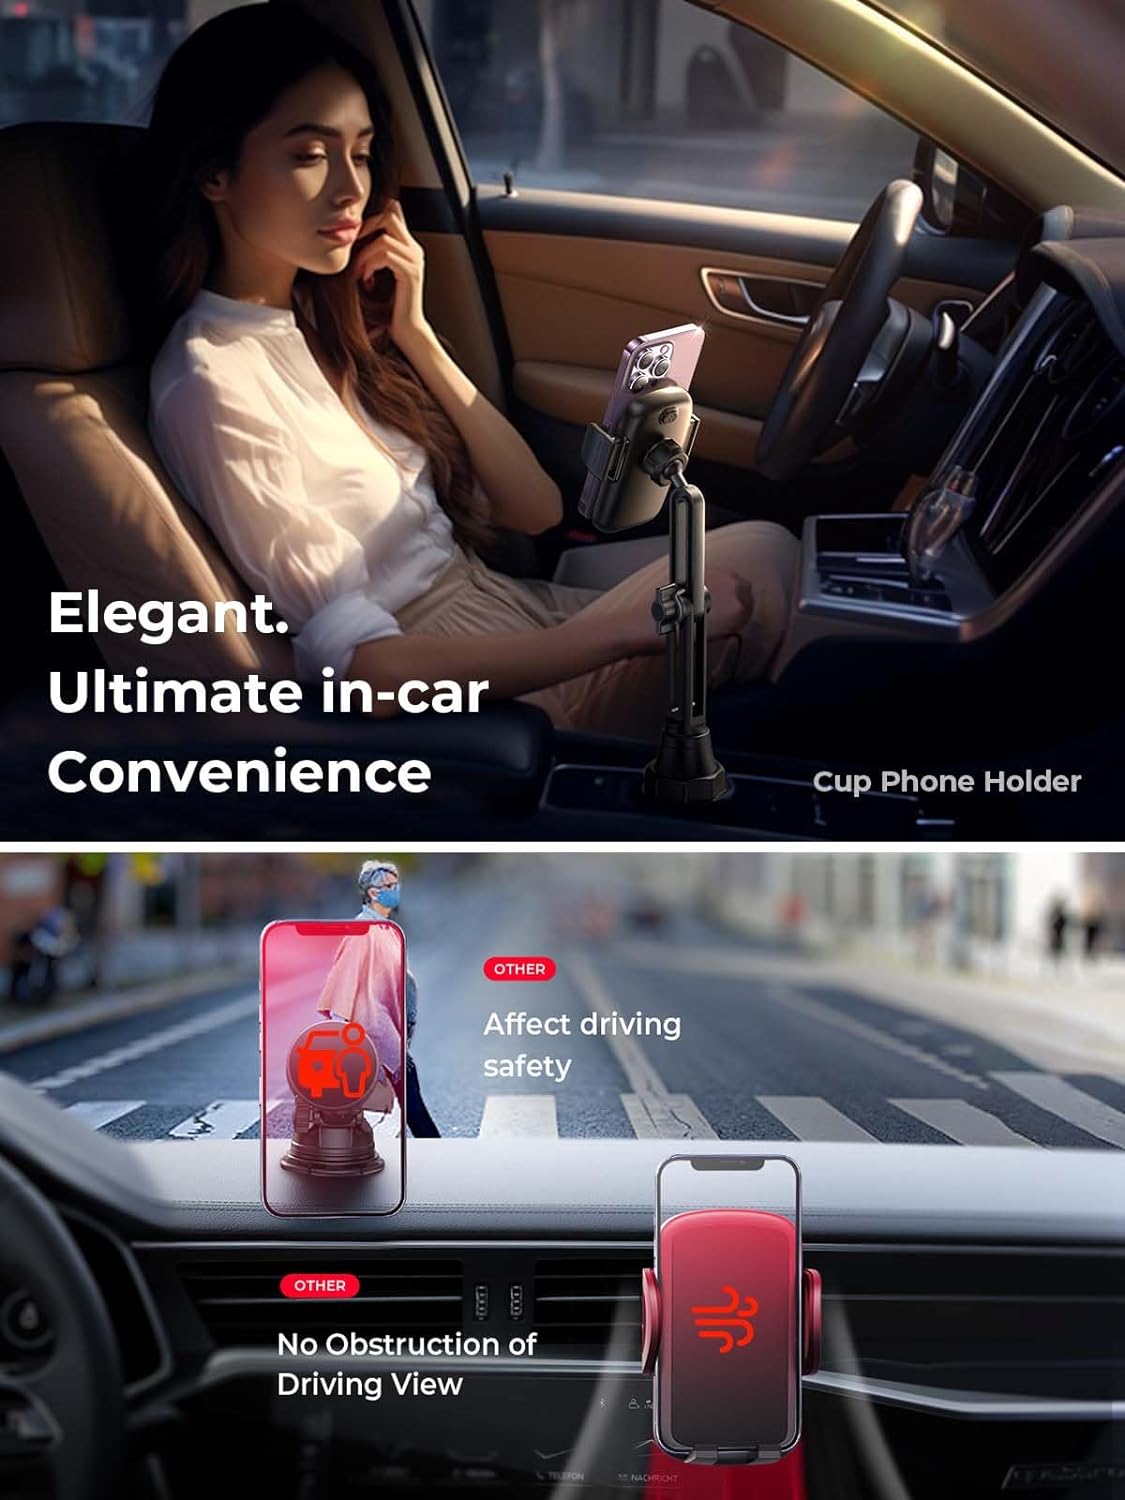 Lisen Cup Holder Phone Mount for Car